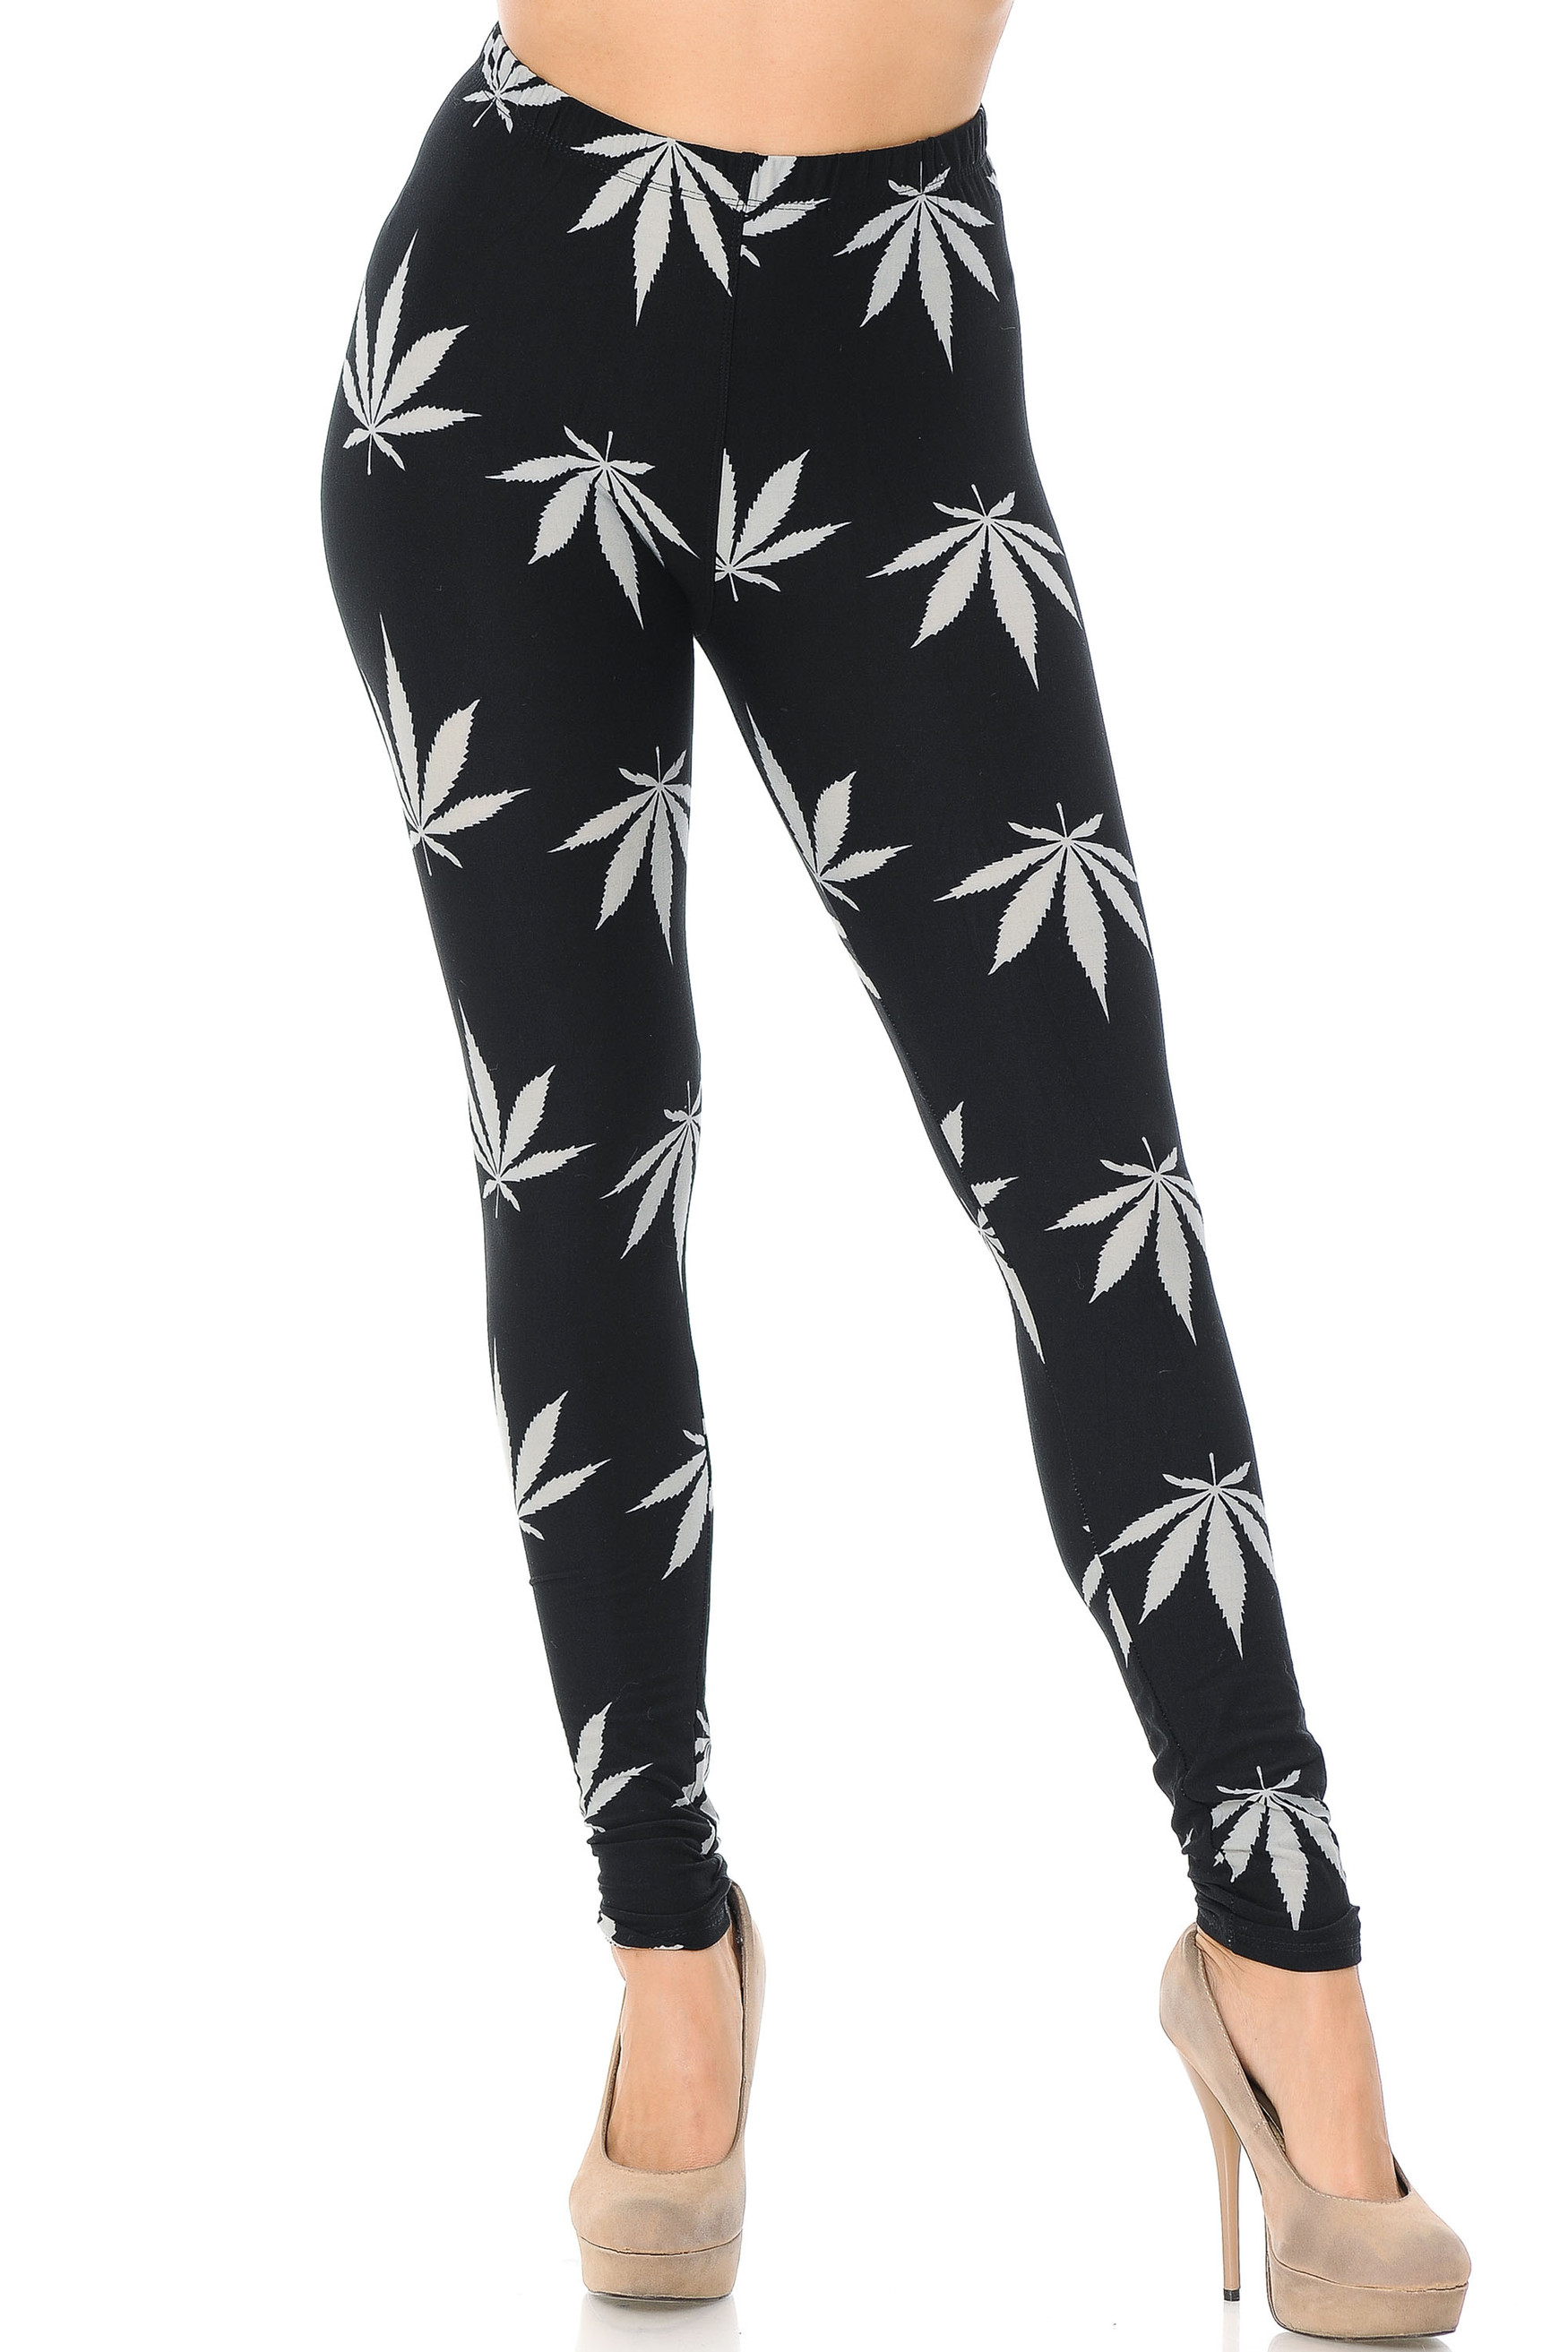 Brushed Black Marijuana Plus Size Leggings